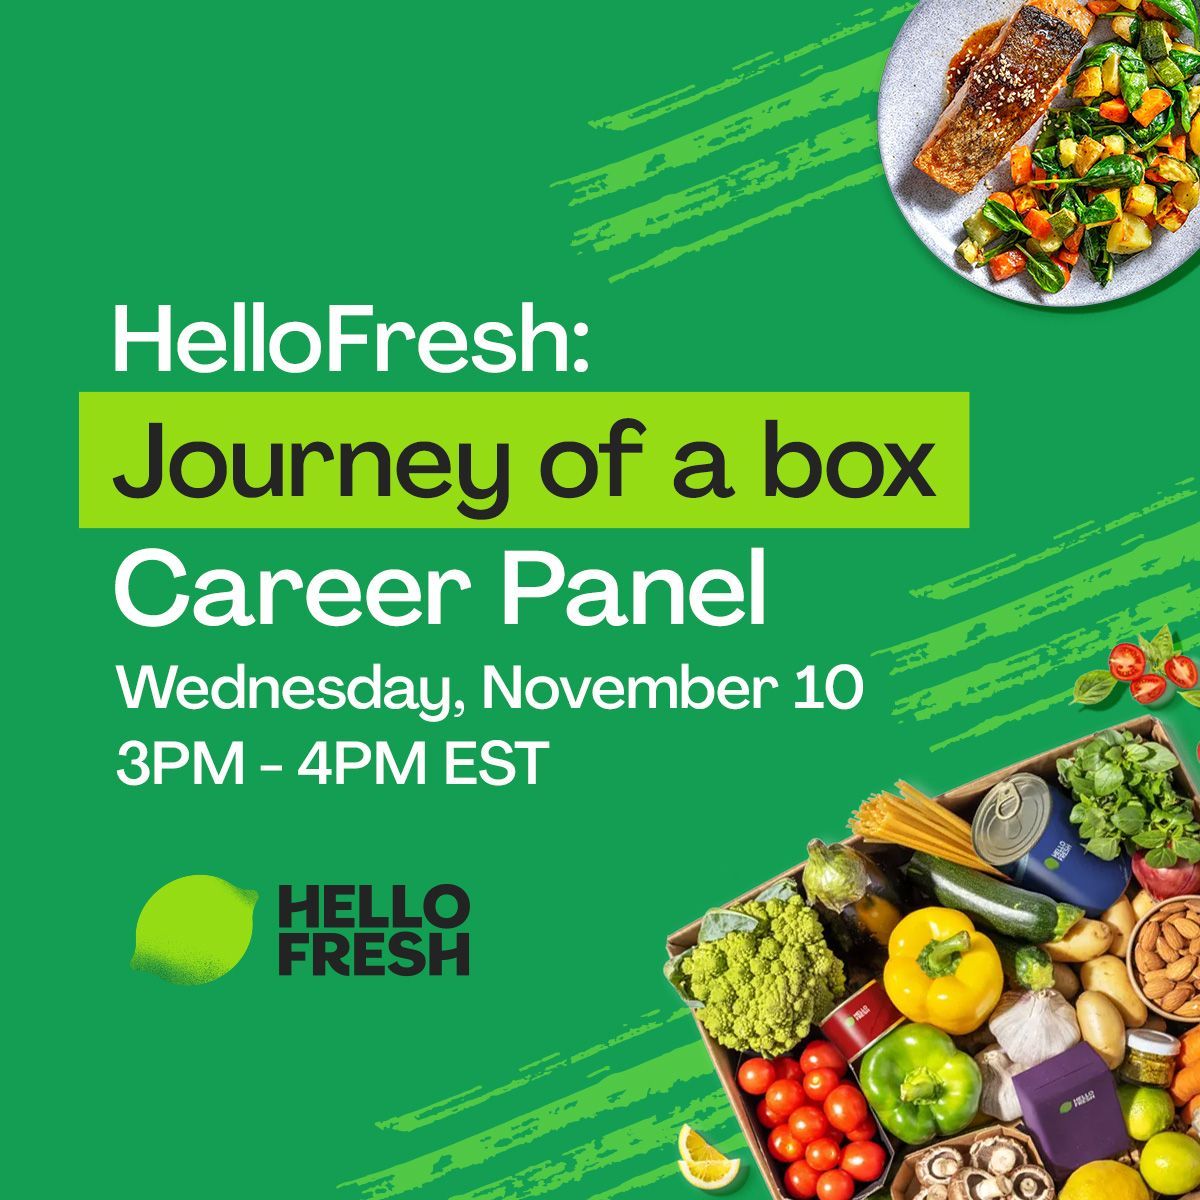 HelloFresh on LinkedIn: HelloFresh: Journey of a Box - Career Panel